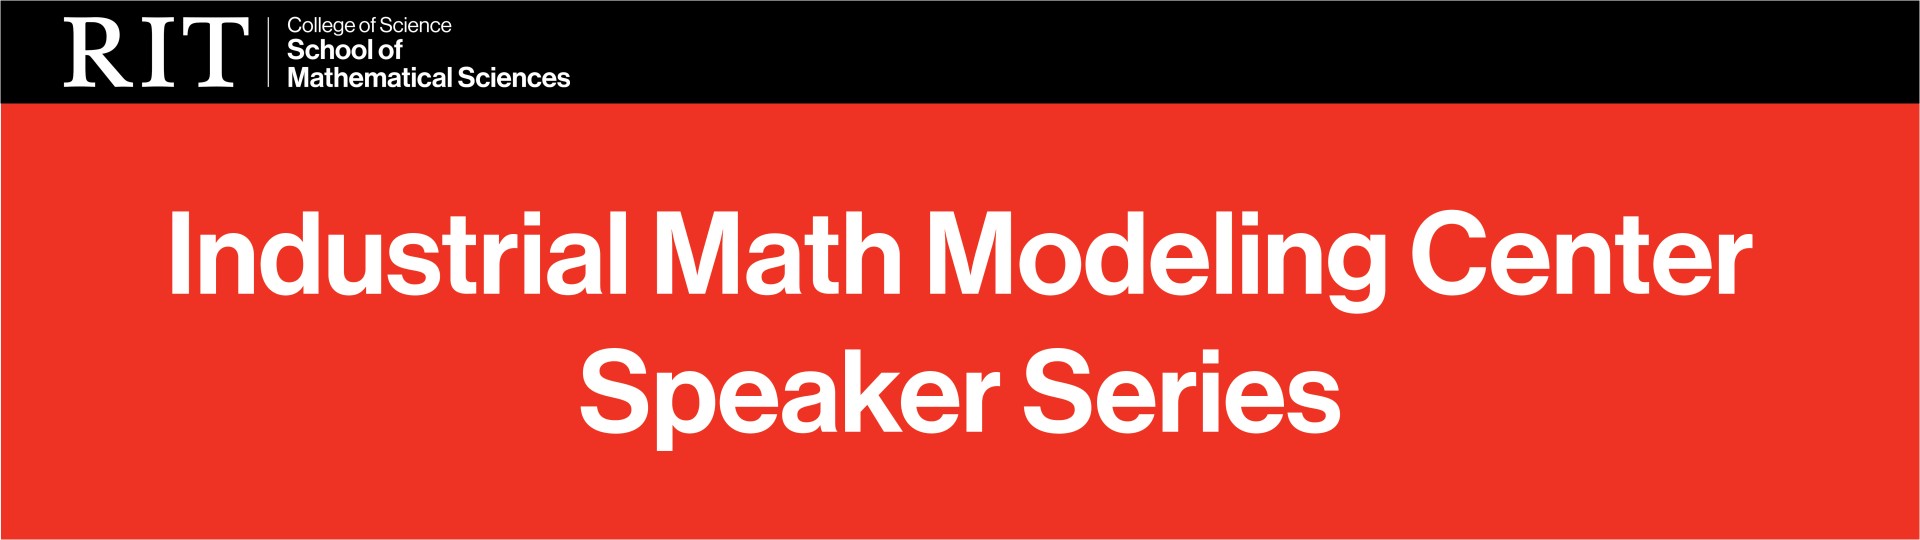 RIT Event Page Hero Banner Industrial Math Modeling Center Speaker Series_0_0